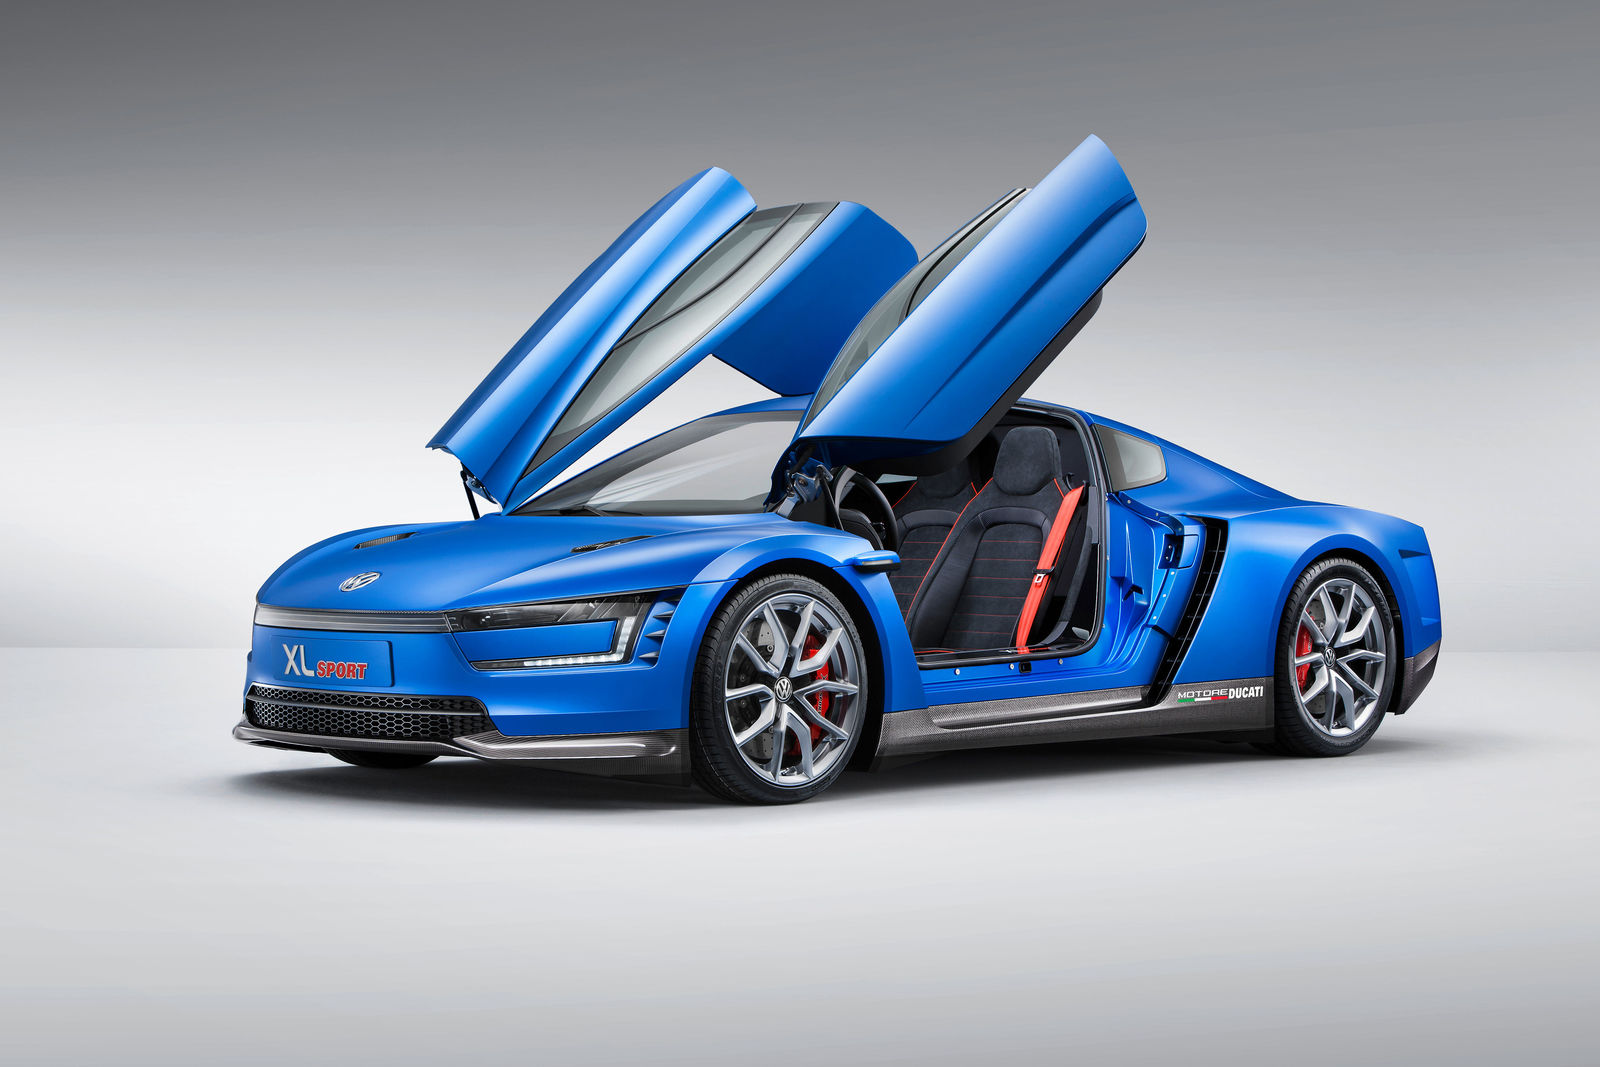 Volkswagen XL Sport concept car